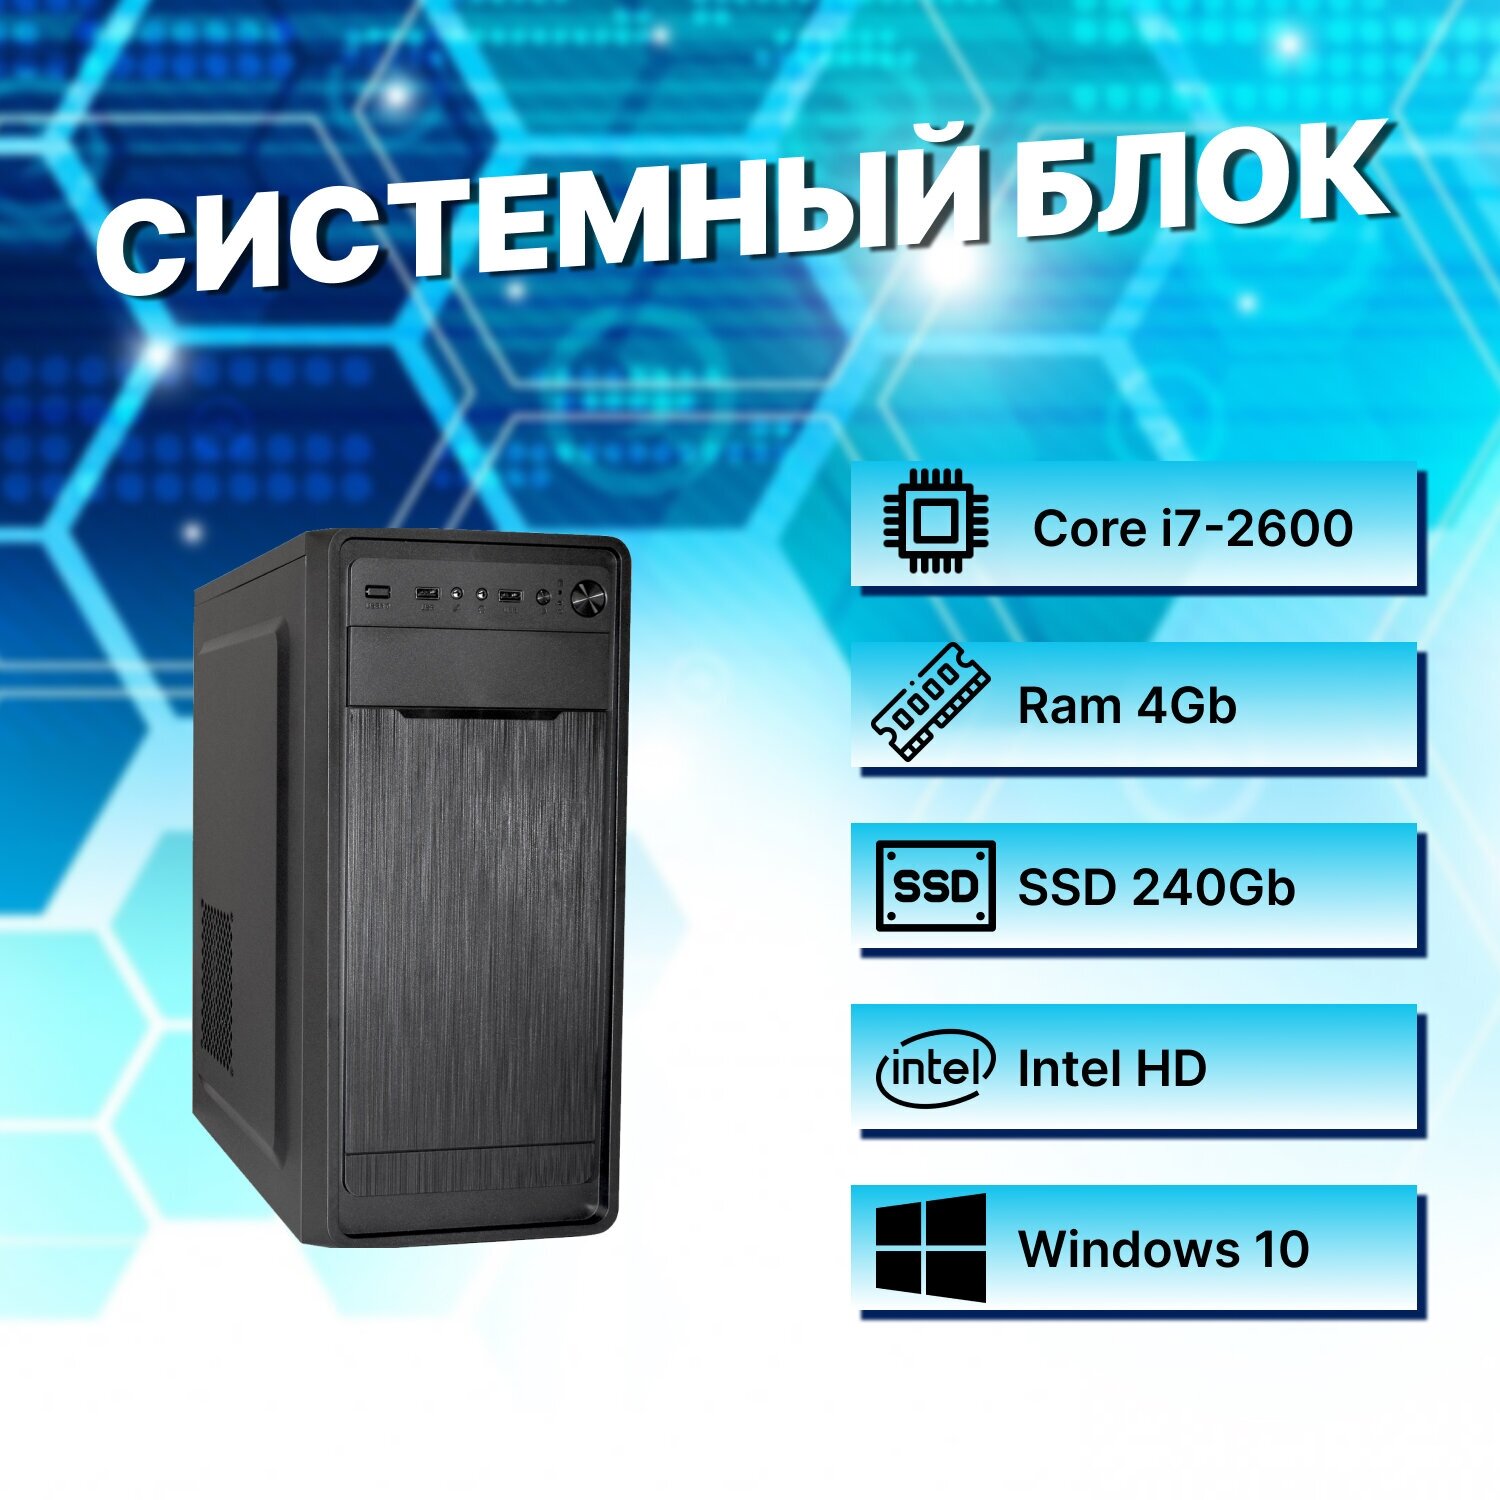 Системный блок Intel Core i7-2600 (3.4ГГц)/ RAM 4Gb/ SSD 240Gb/ Intel HD Graphics 2000/ Windows 10 Pro